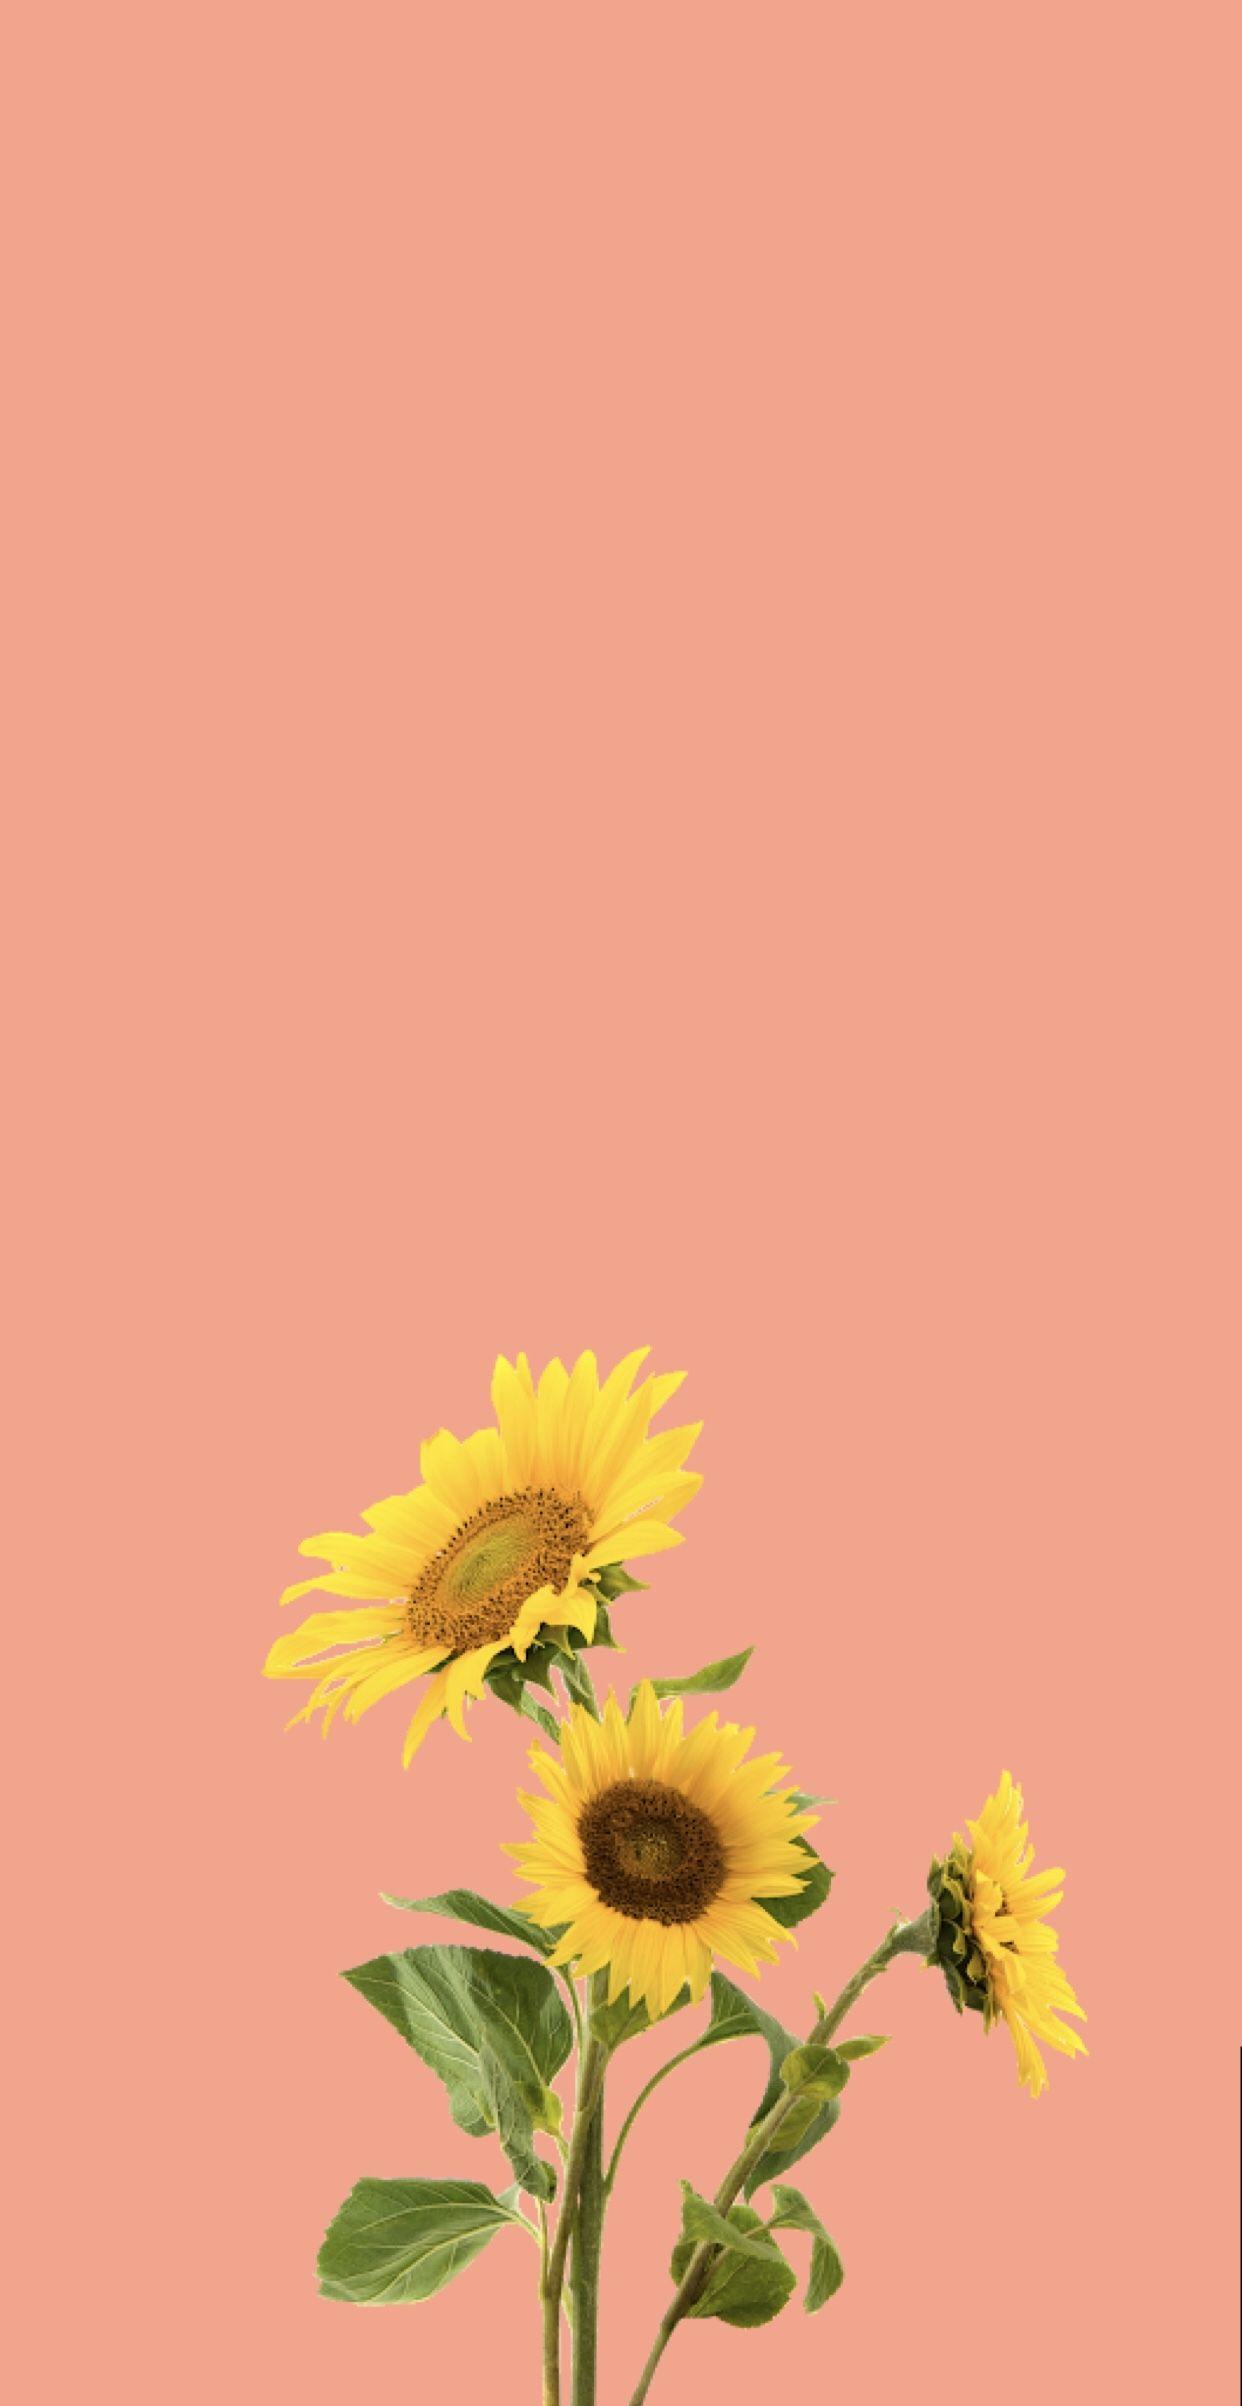 Sunflower iPhone Wallpaper - Free Phone Background - Verderamade